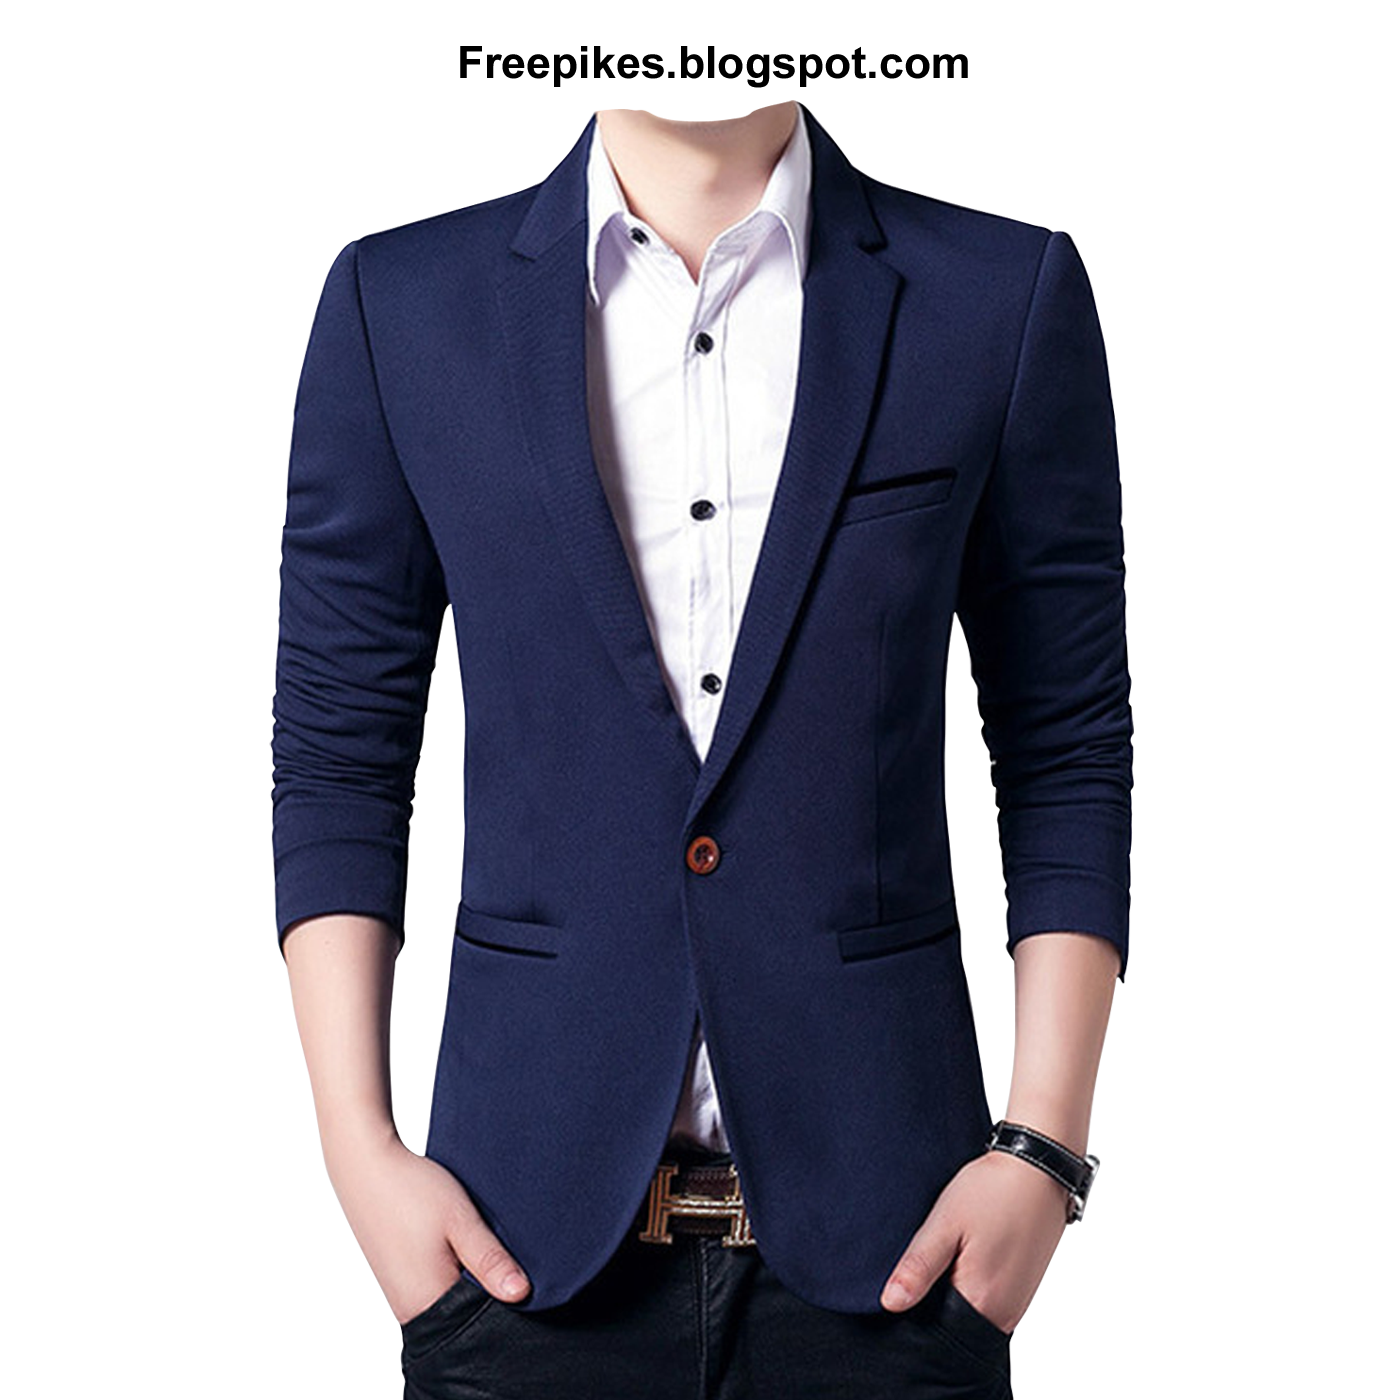 Download Free PSD Dress in Blue - Coat Dress for Men ~ FreePikes